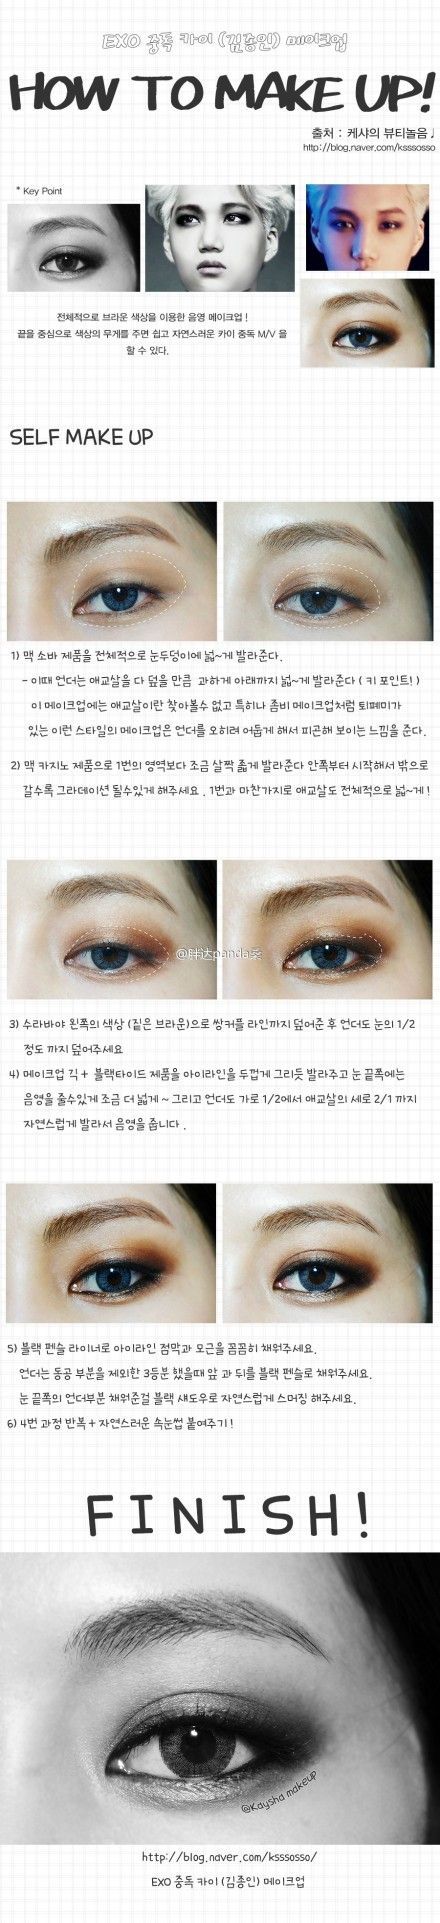 self-eye-makeup-tutorial-02_13 Zelf oog make-up tutorial